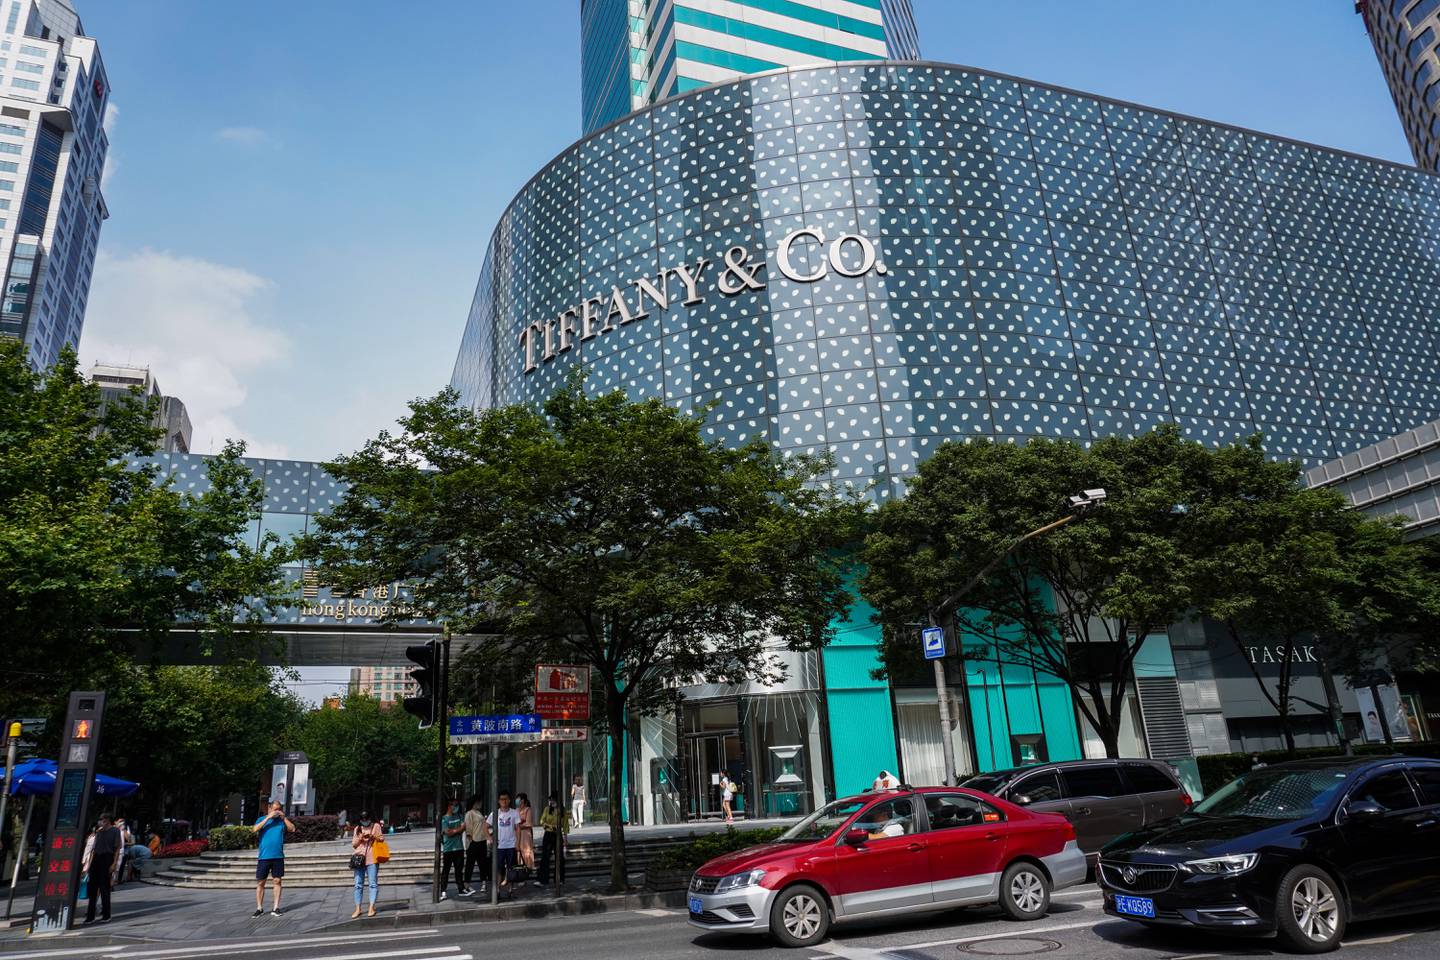 Tiffany & Co store in Shanghai, China